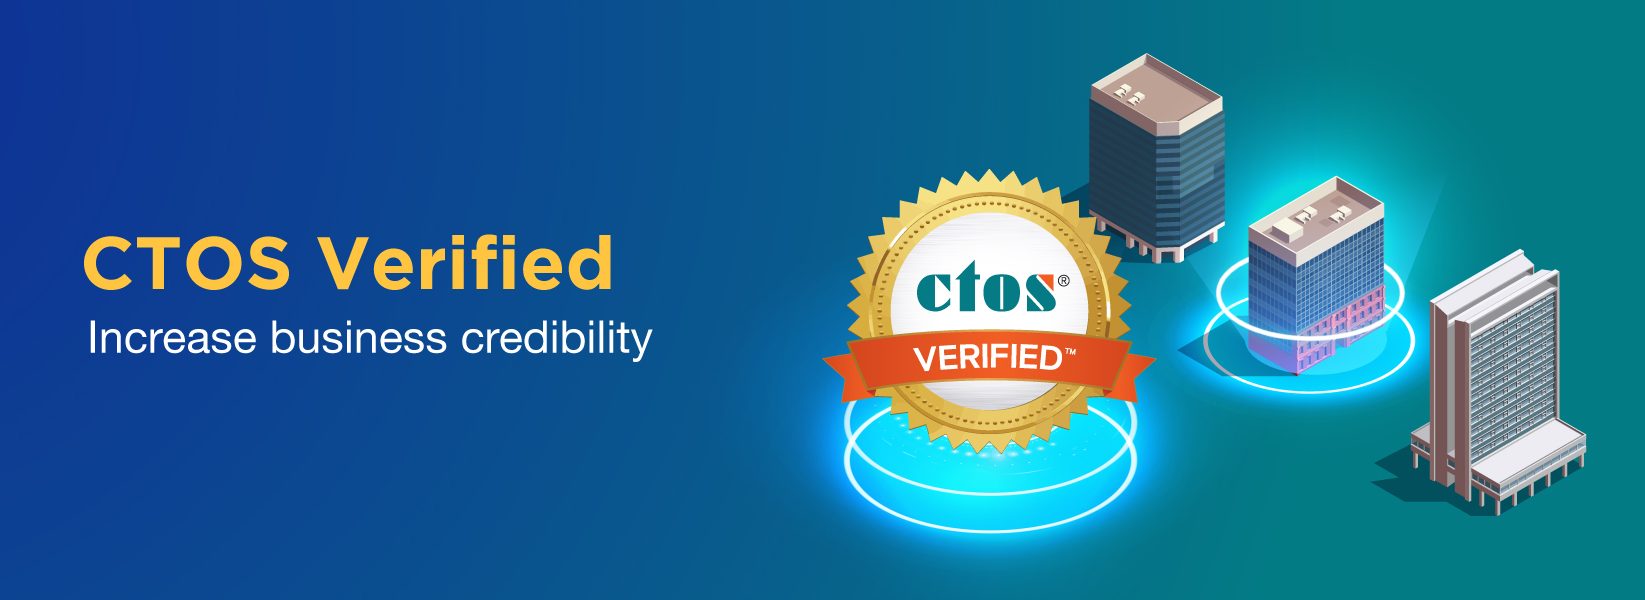 CTOS verification